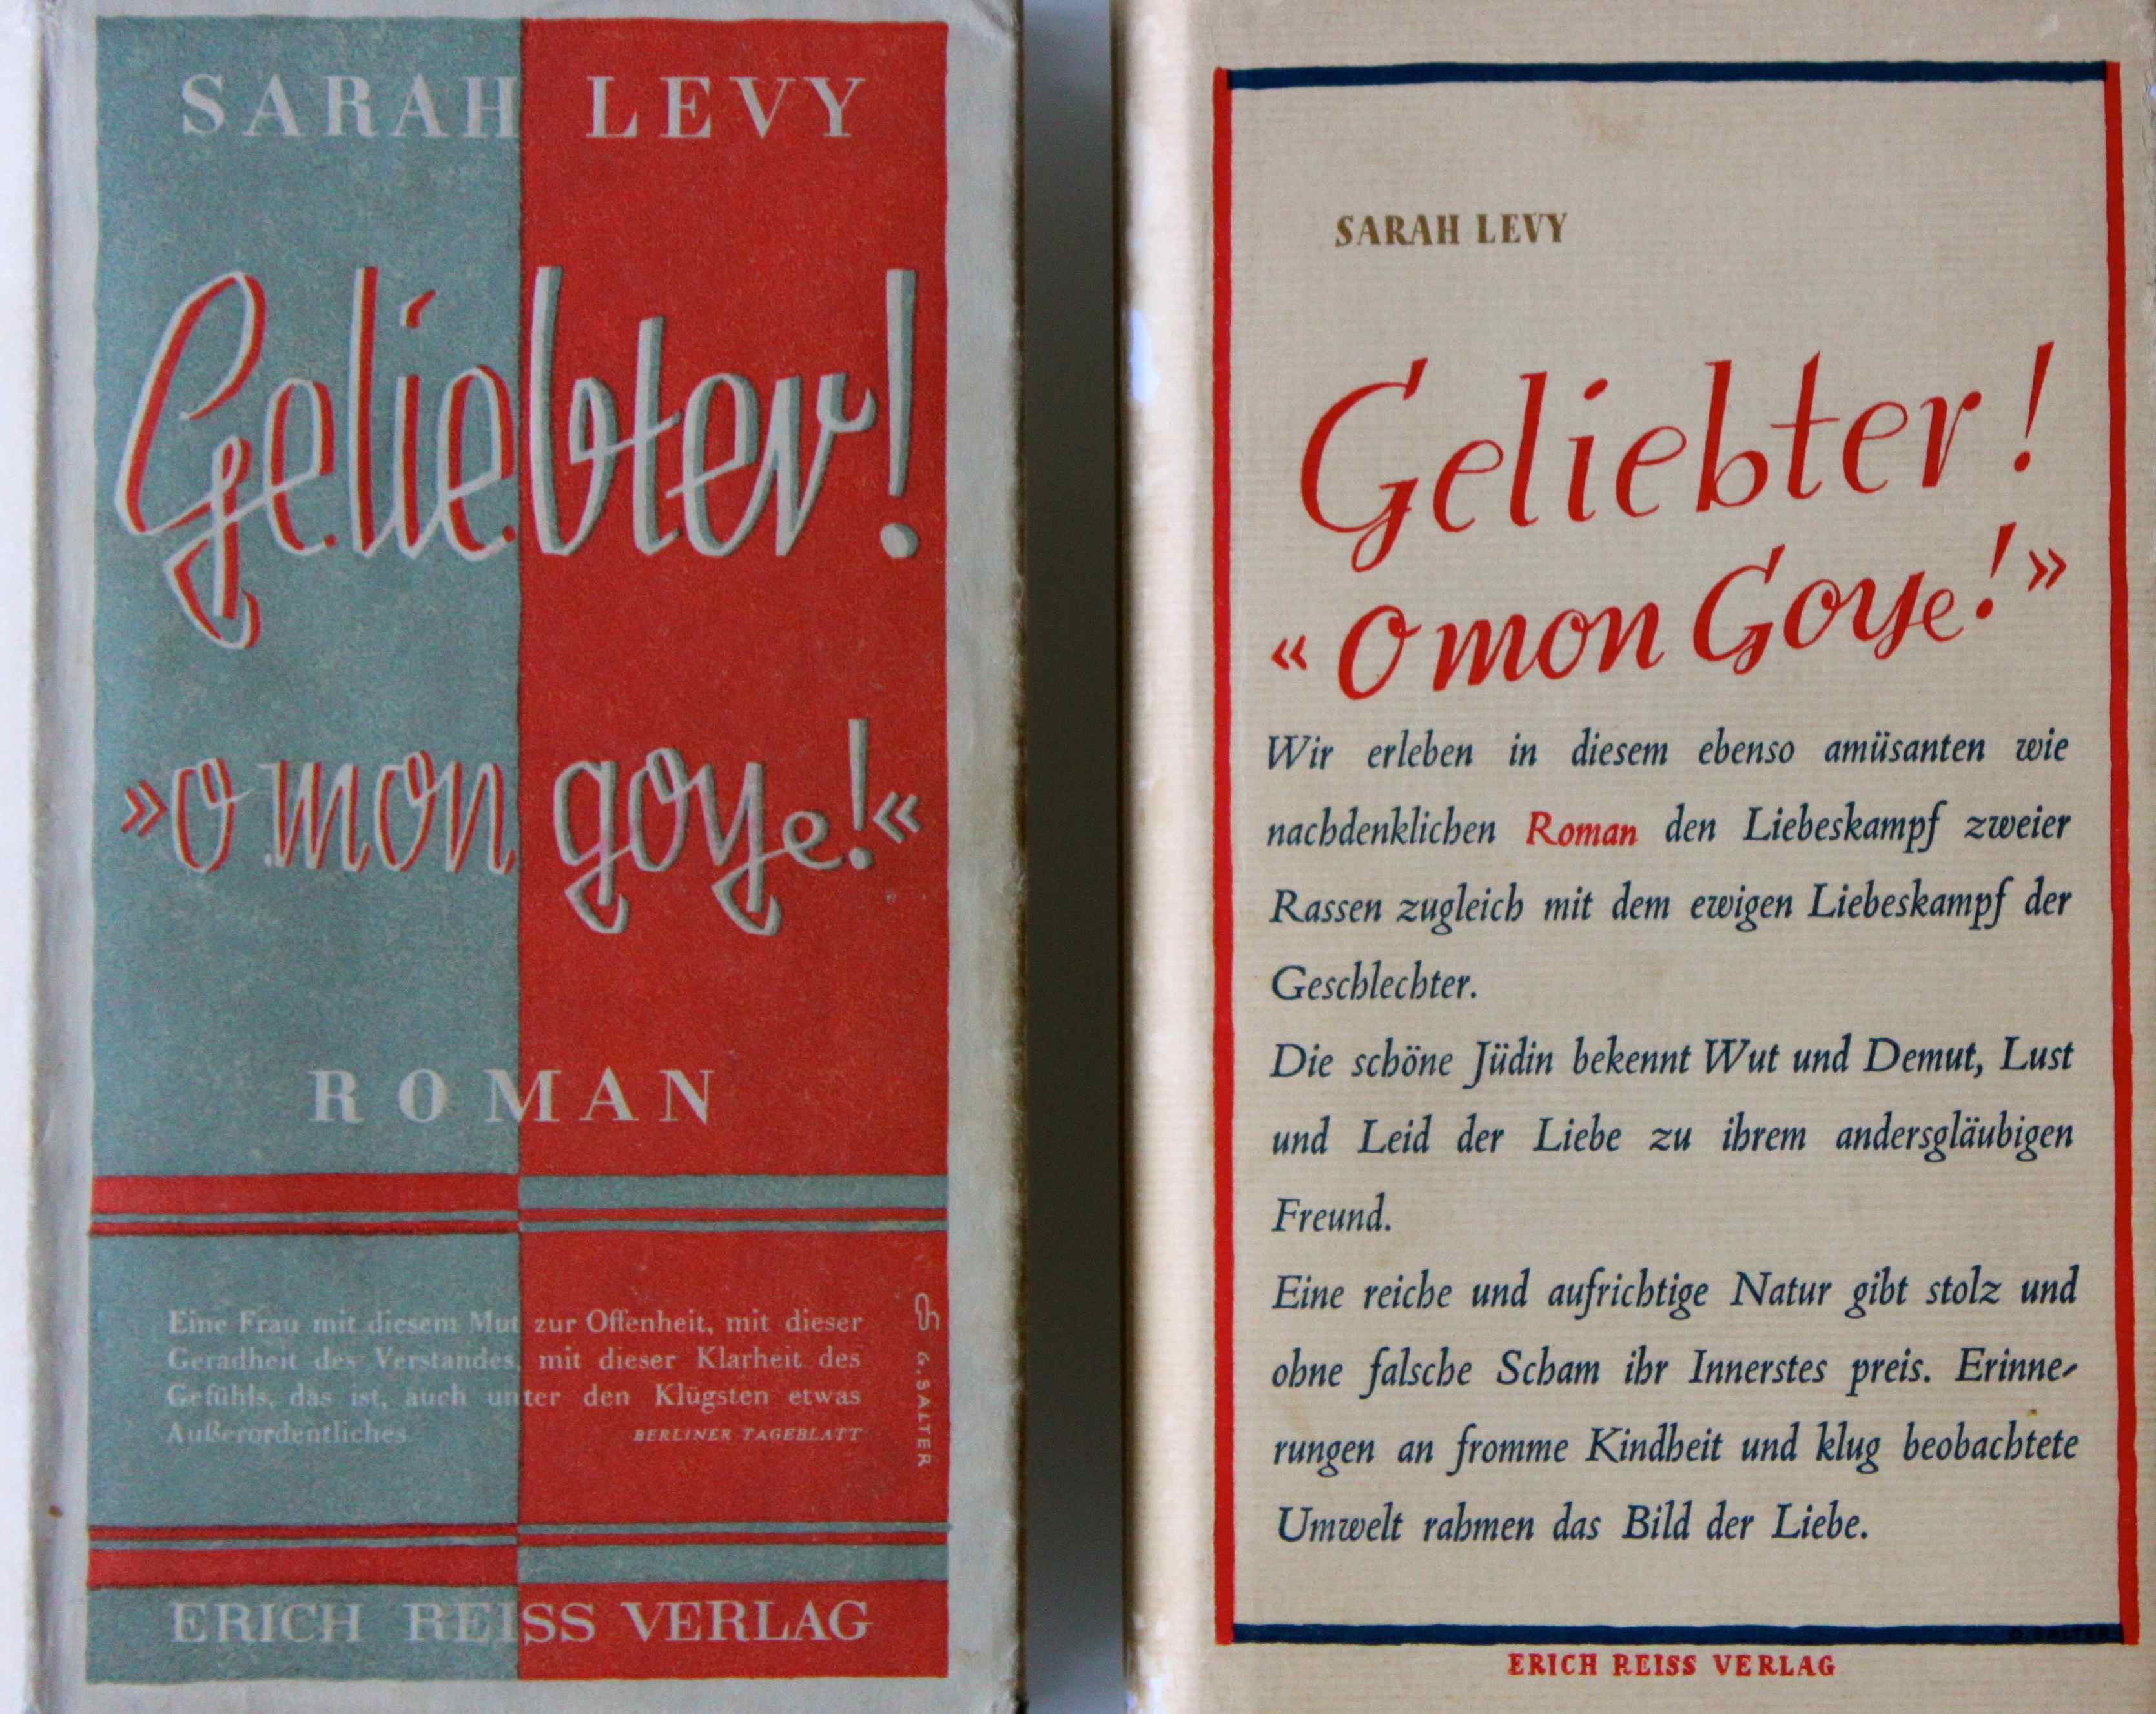 Sarah Levy, Geliebter! O mon Goye, 1.-6. Tsd. 1929 (rechts) und 12.-14. Tsd. 1931